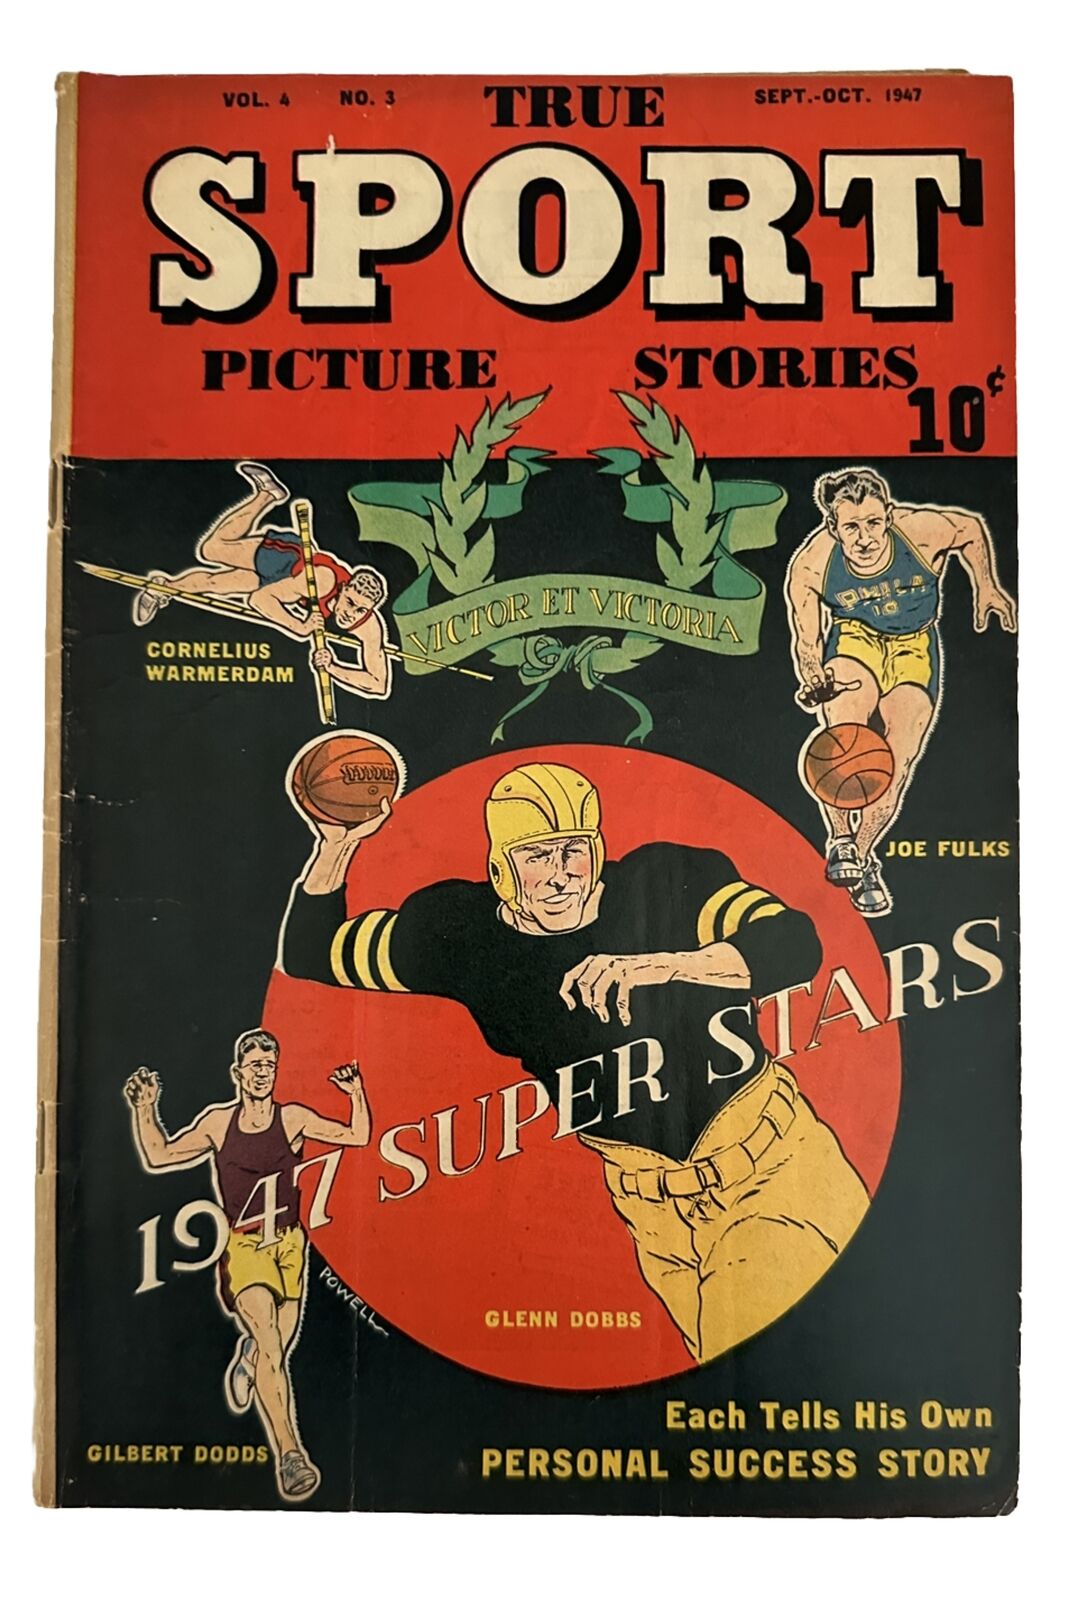 True Sport Picture Stories #3 Vol. 4 1947 (VG+) Golden Age 1947 Super Stars